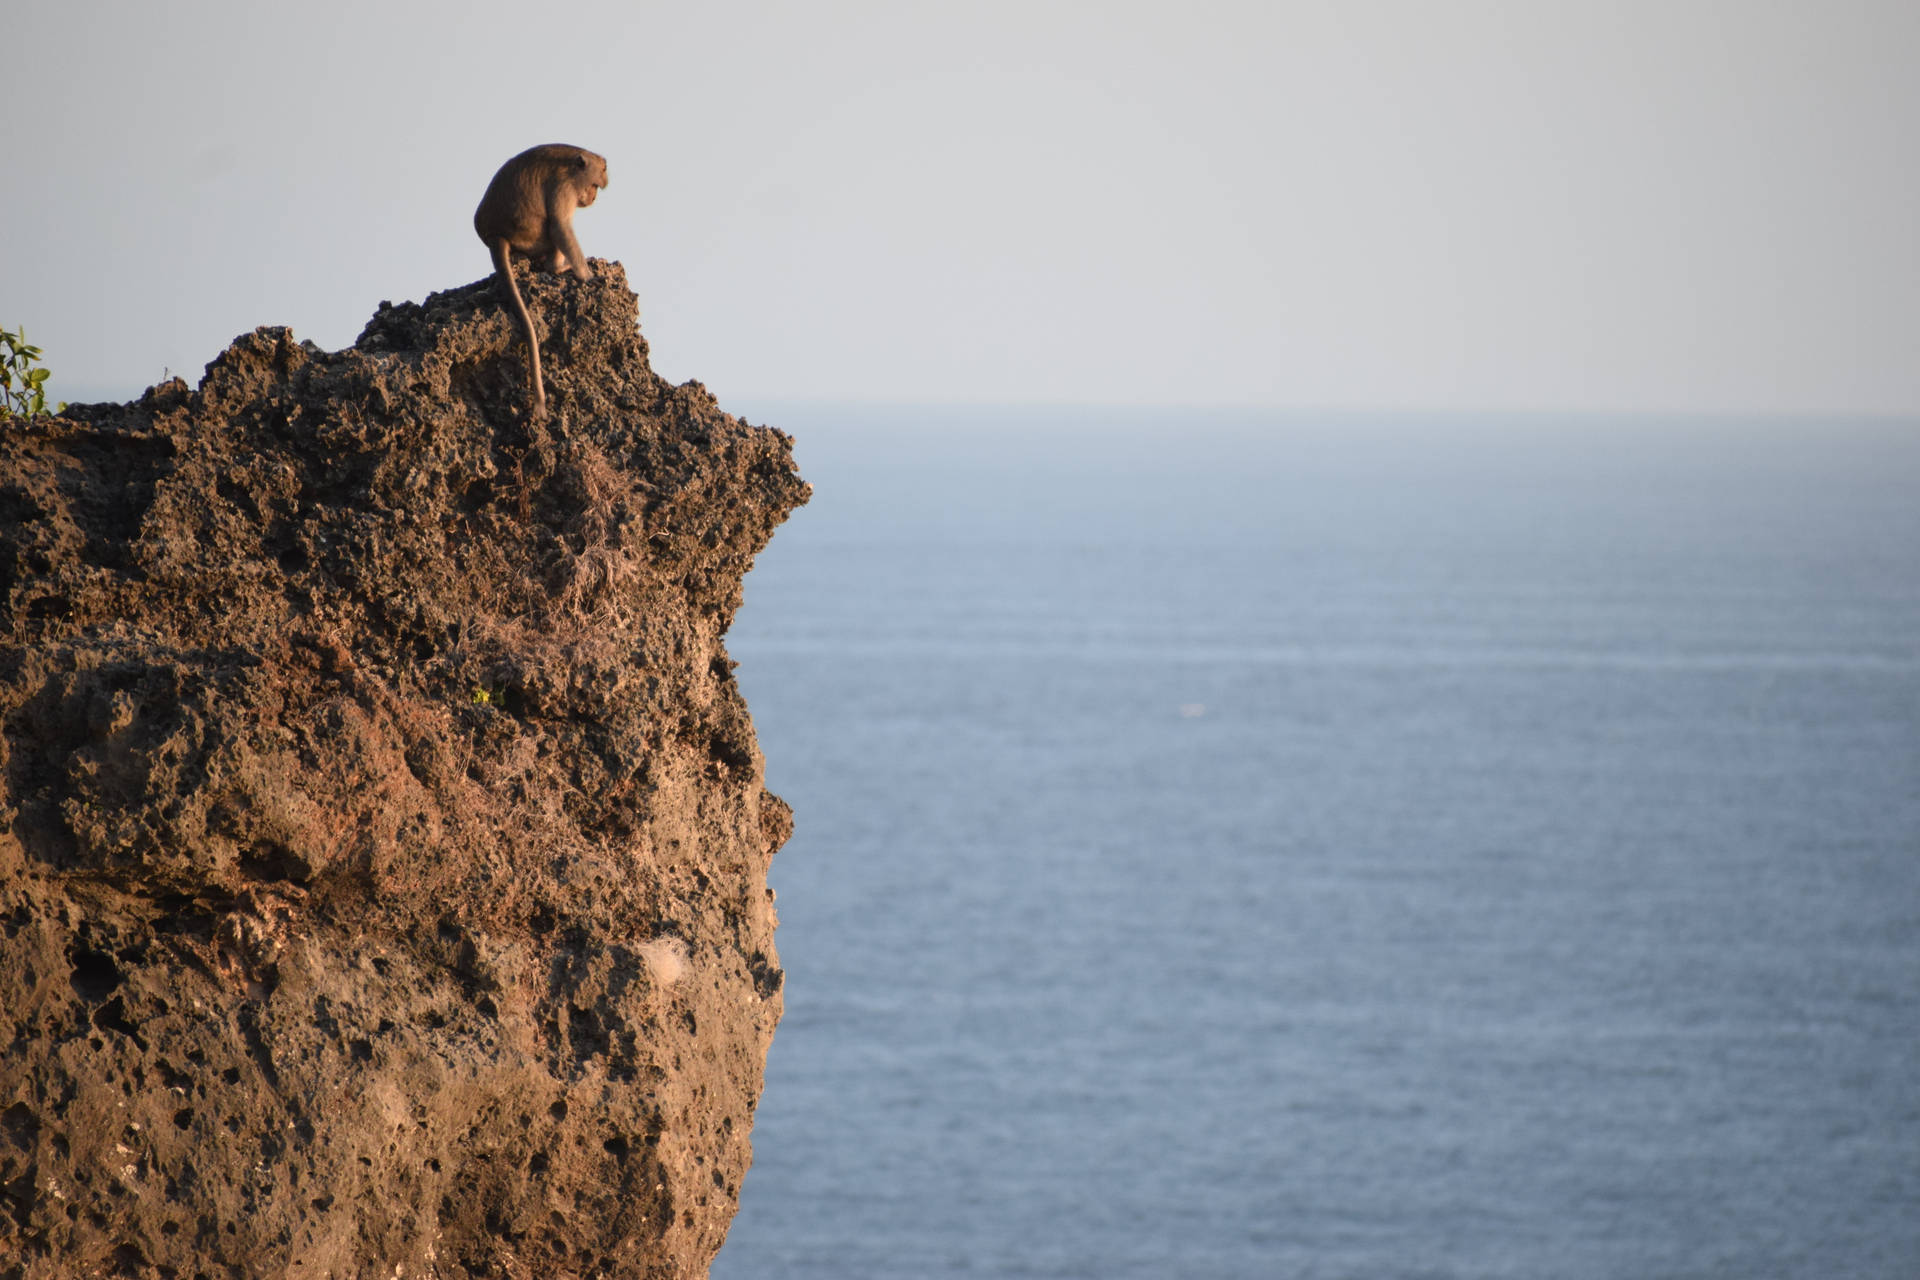 Monkey On Cliff Awesome Animal